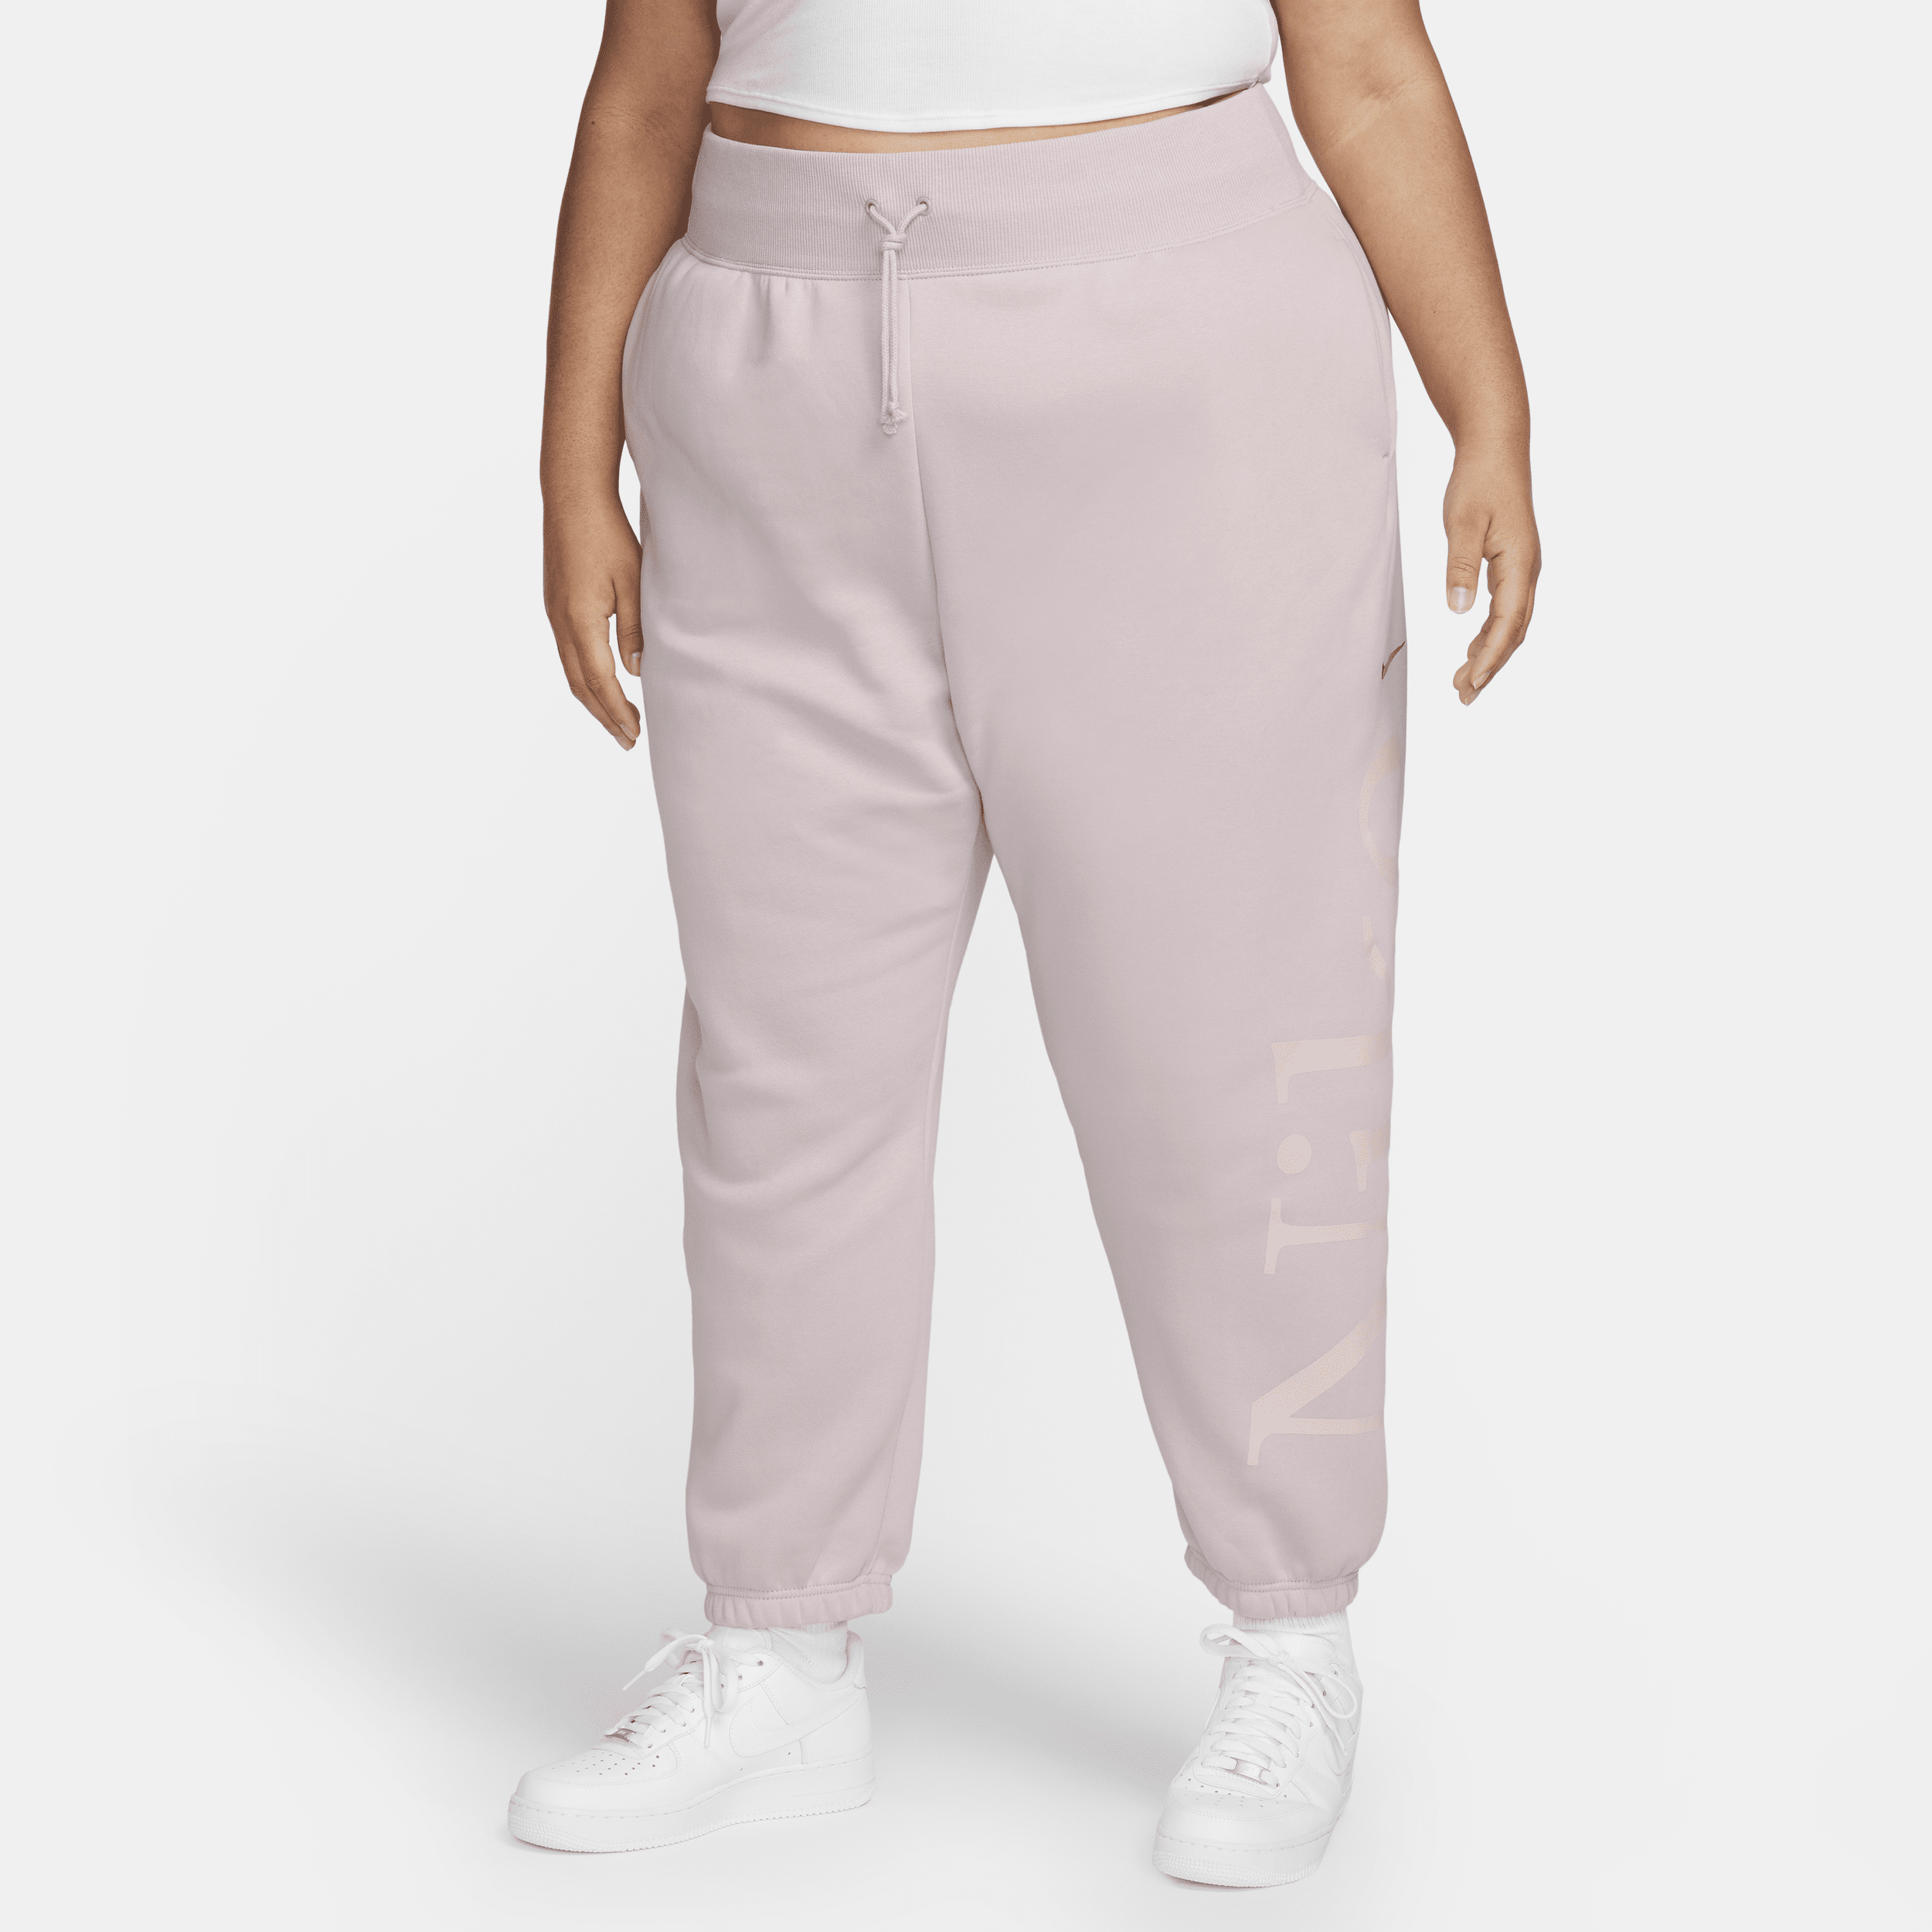 Oversized Nike Sportswear Phoenix Fleece-sweatpants med logo til kvinder (plus size) - lilla